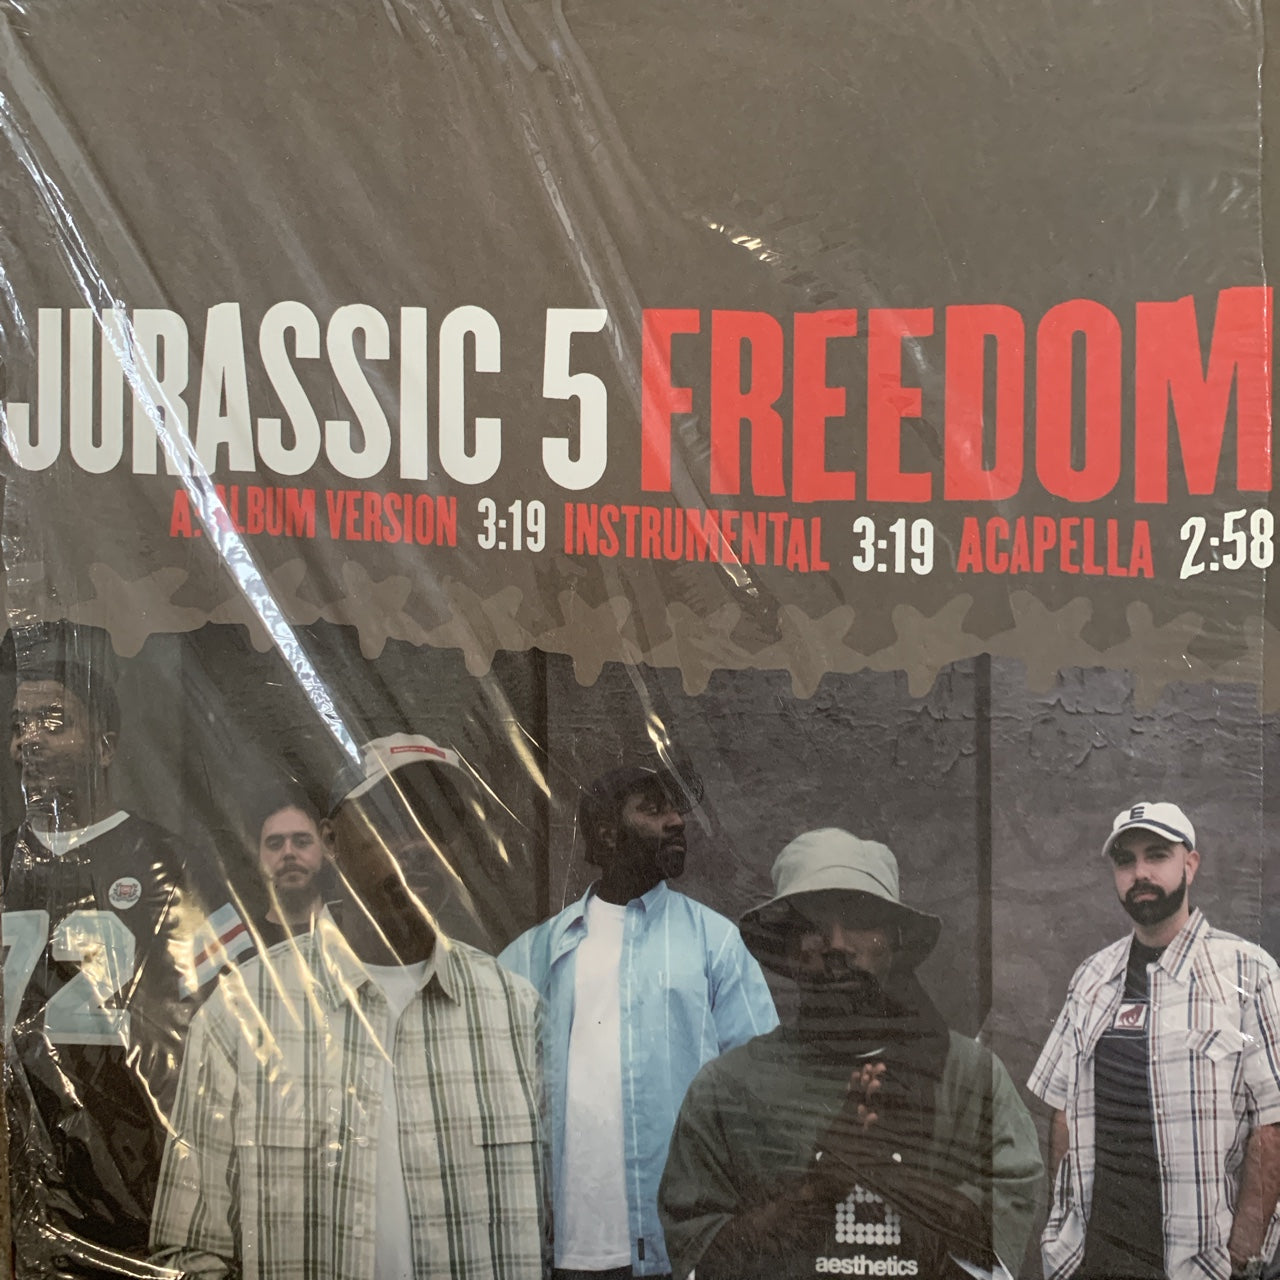 Jurassic 5 “Freedom”